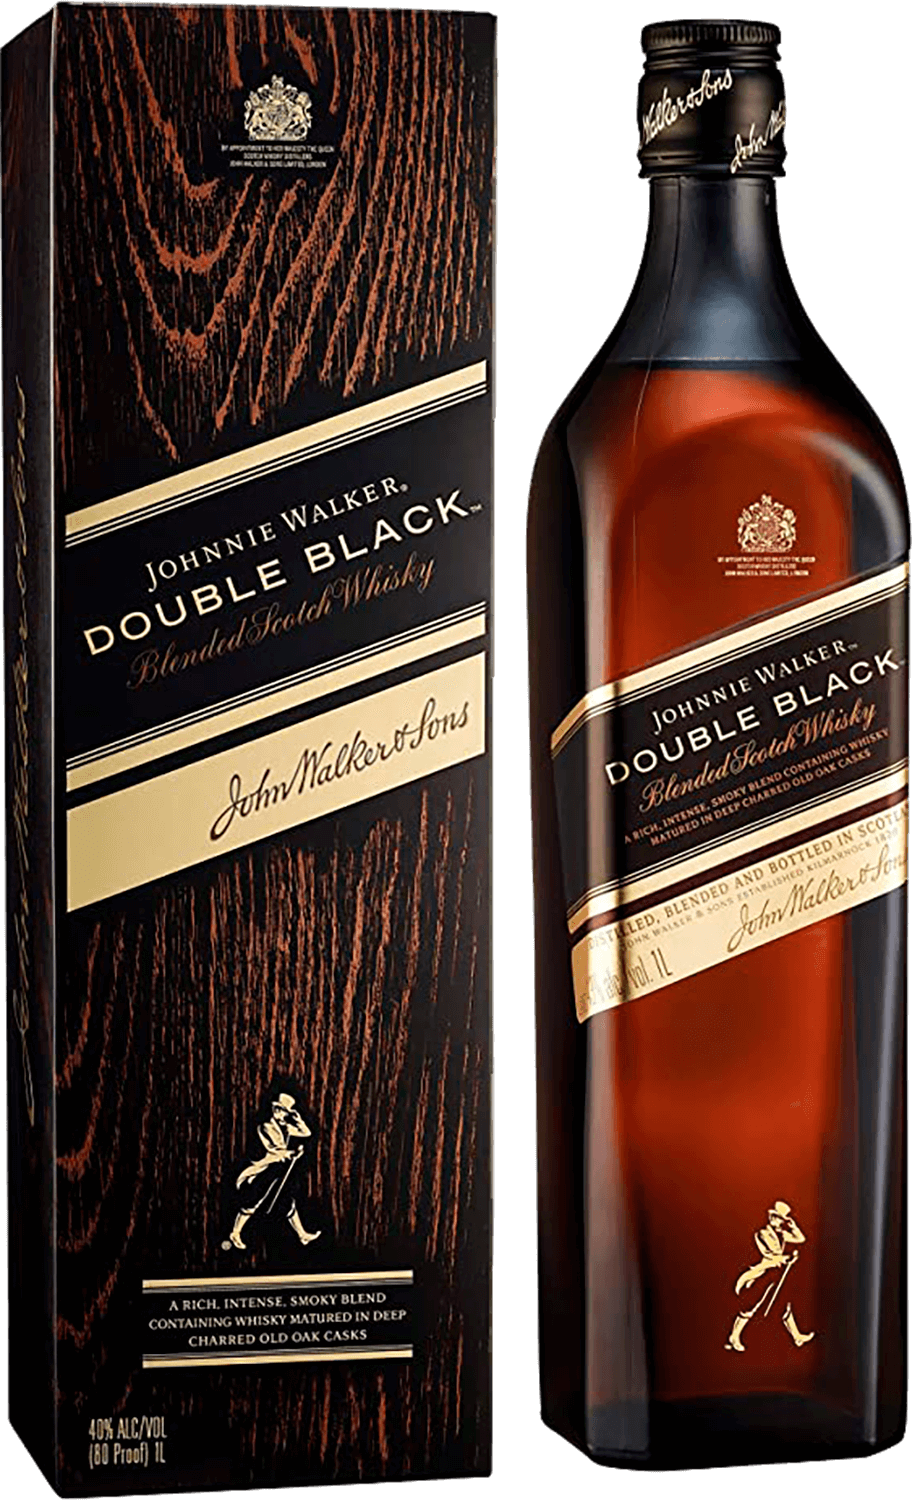 Johnnie Walker Double Black Blended Scotch Whisky (gift box) johnnie walker black label blended scotch whisky gift box with 2 glasses